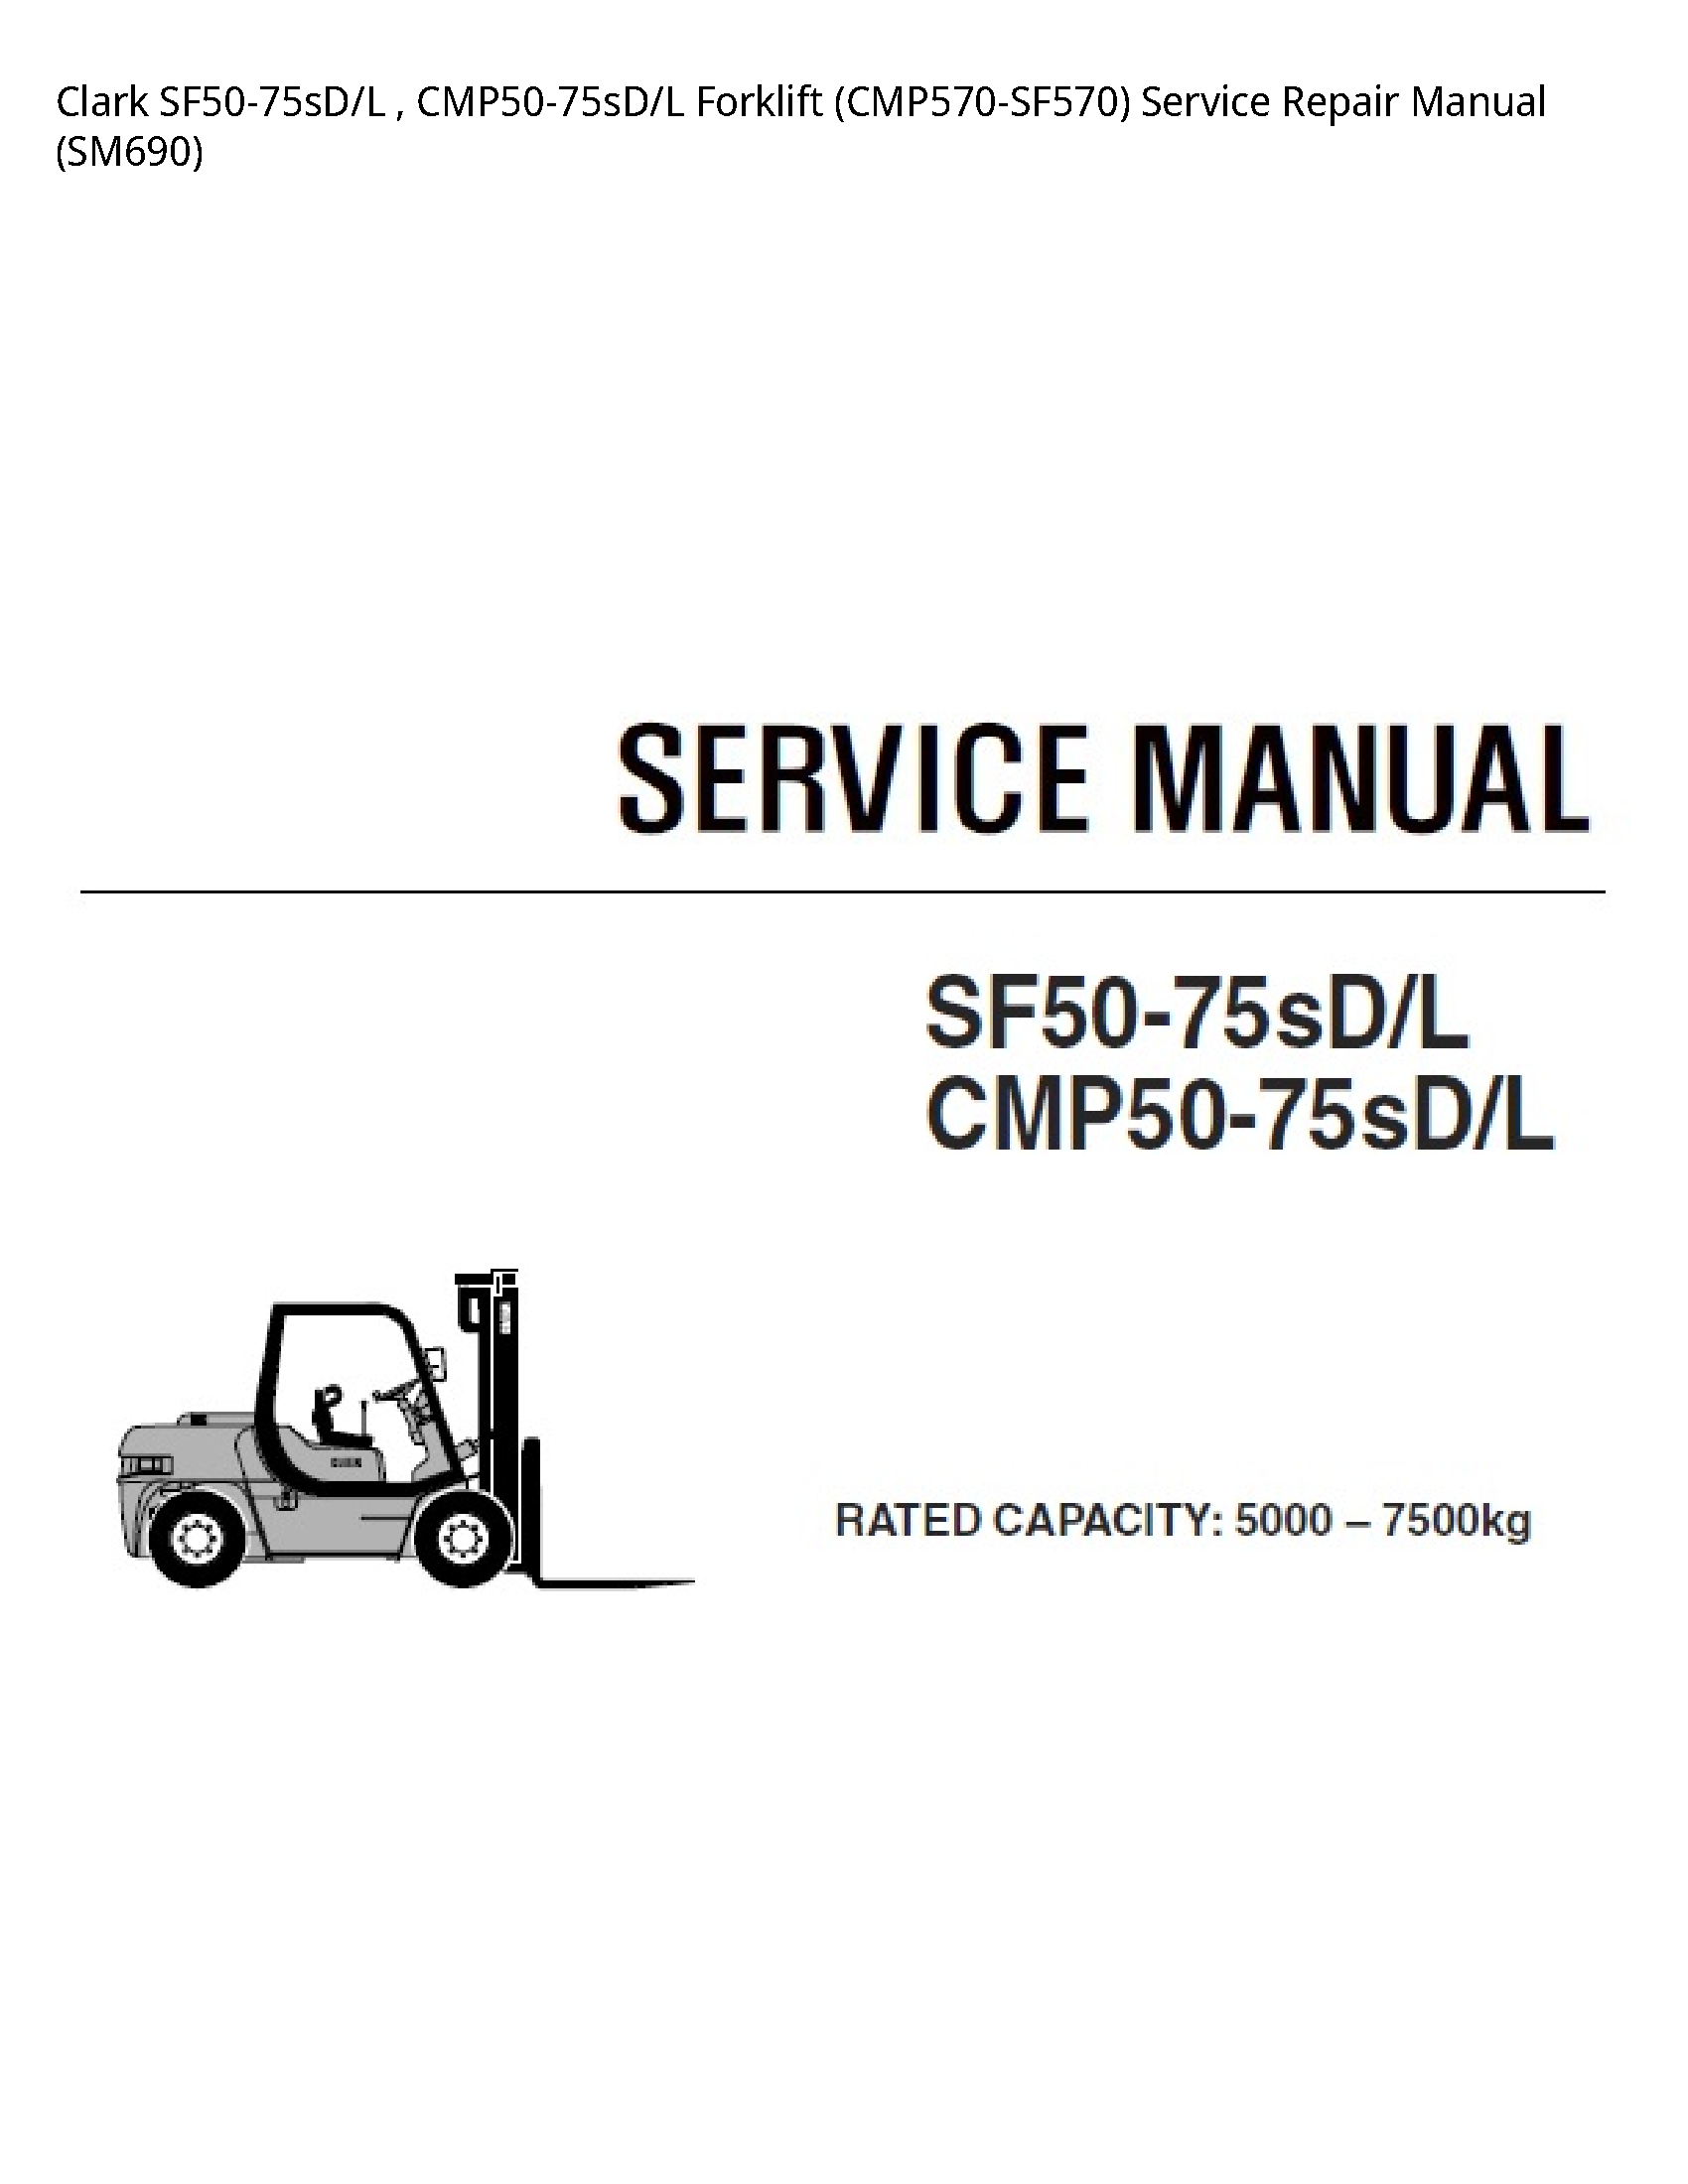 Clark SF50-75sD Forklift manual